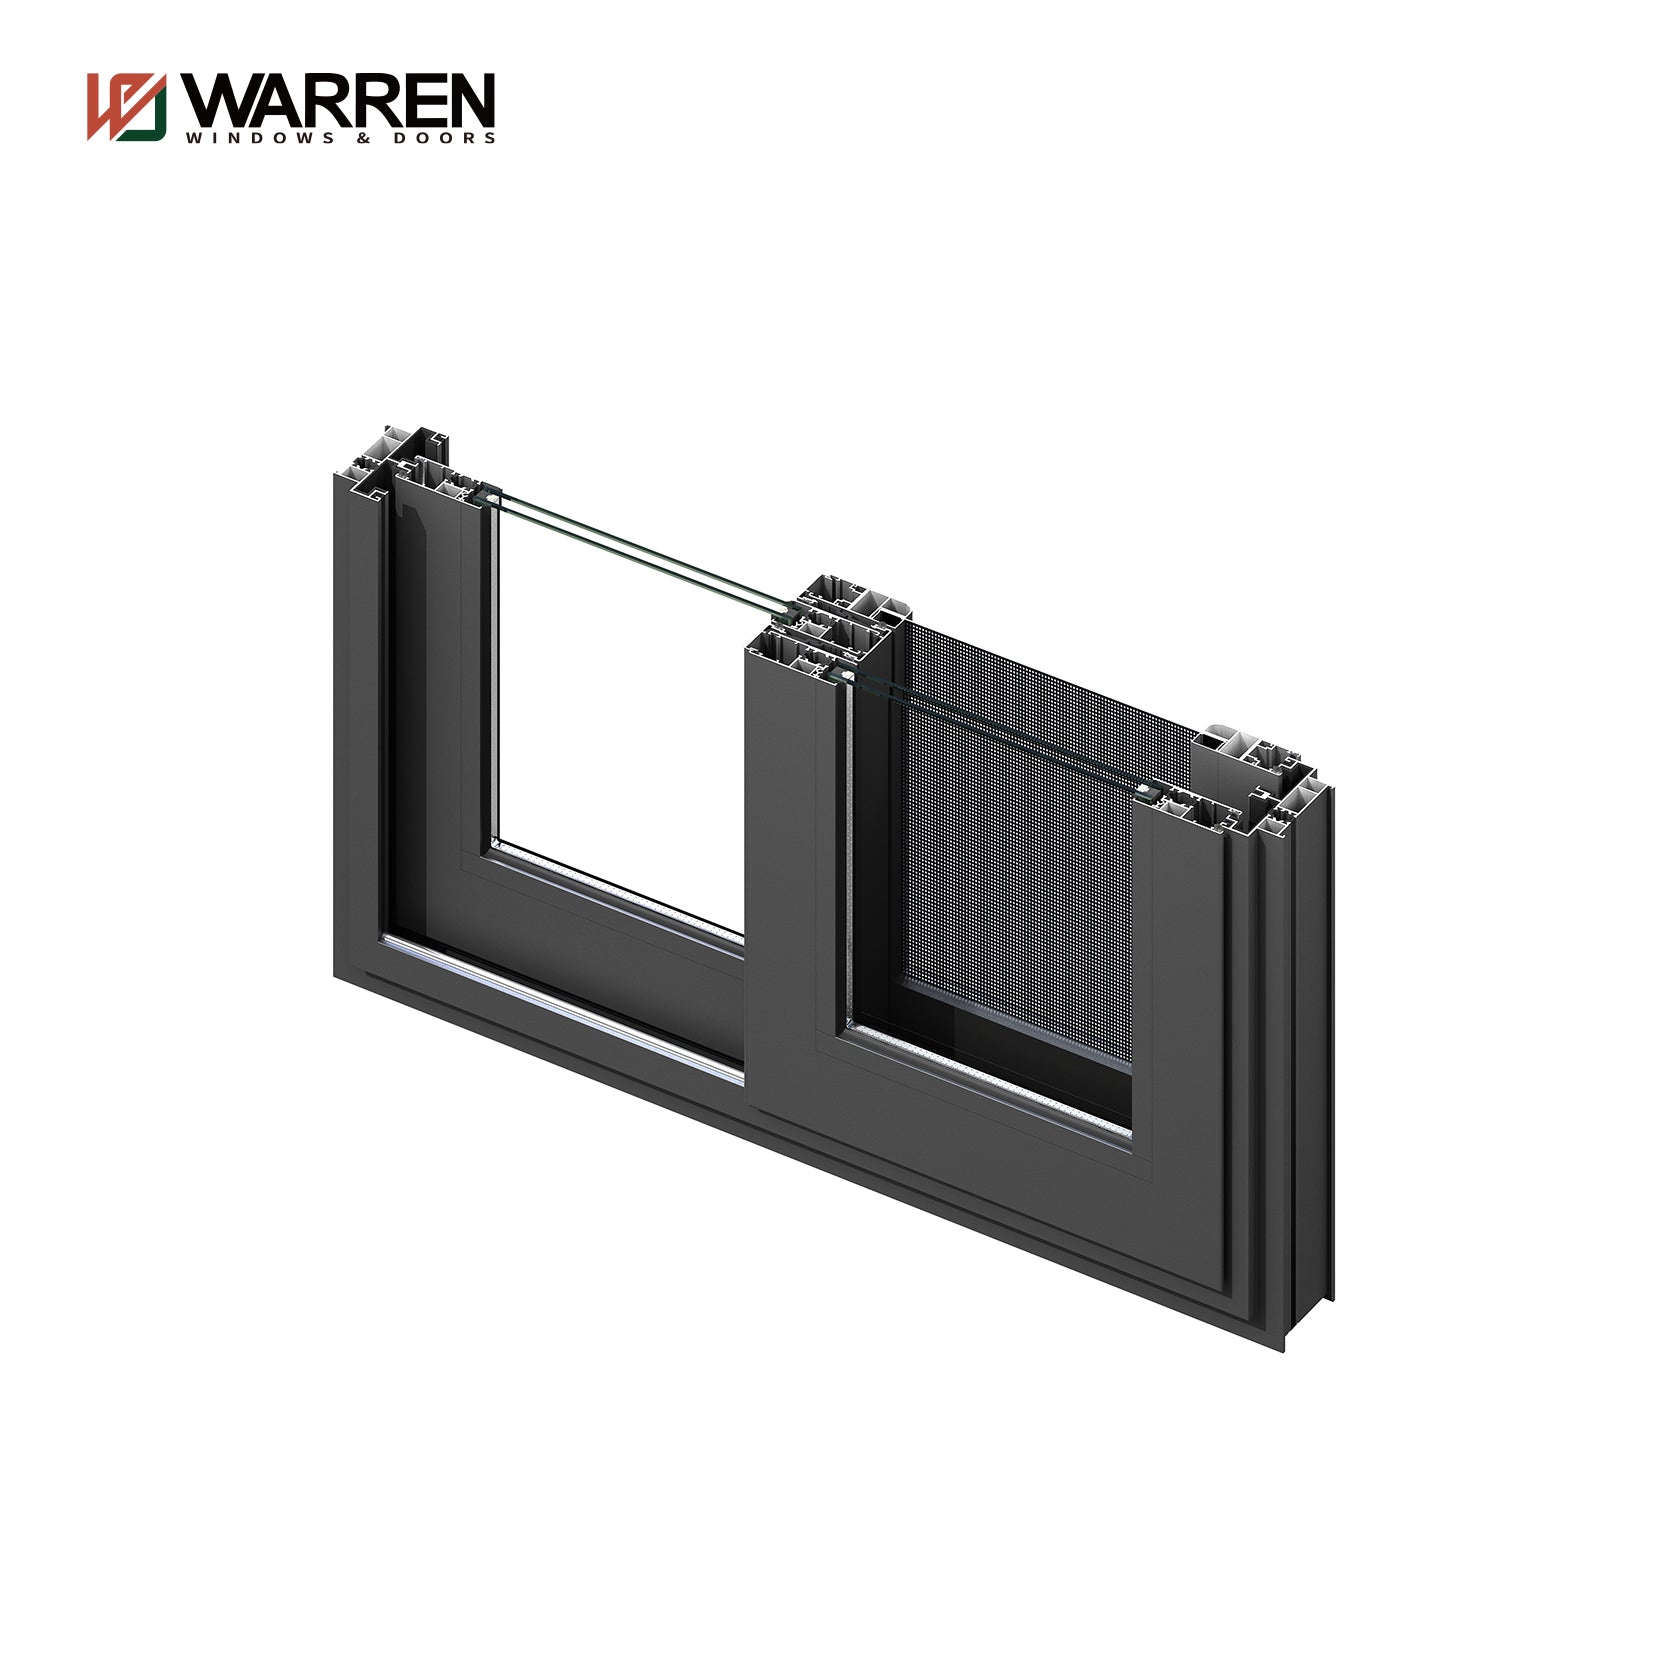 Warren 48x48 window modern promotional doors windows tempered glass sound insulation lock sliding windows